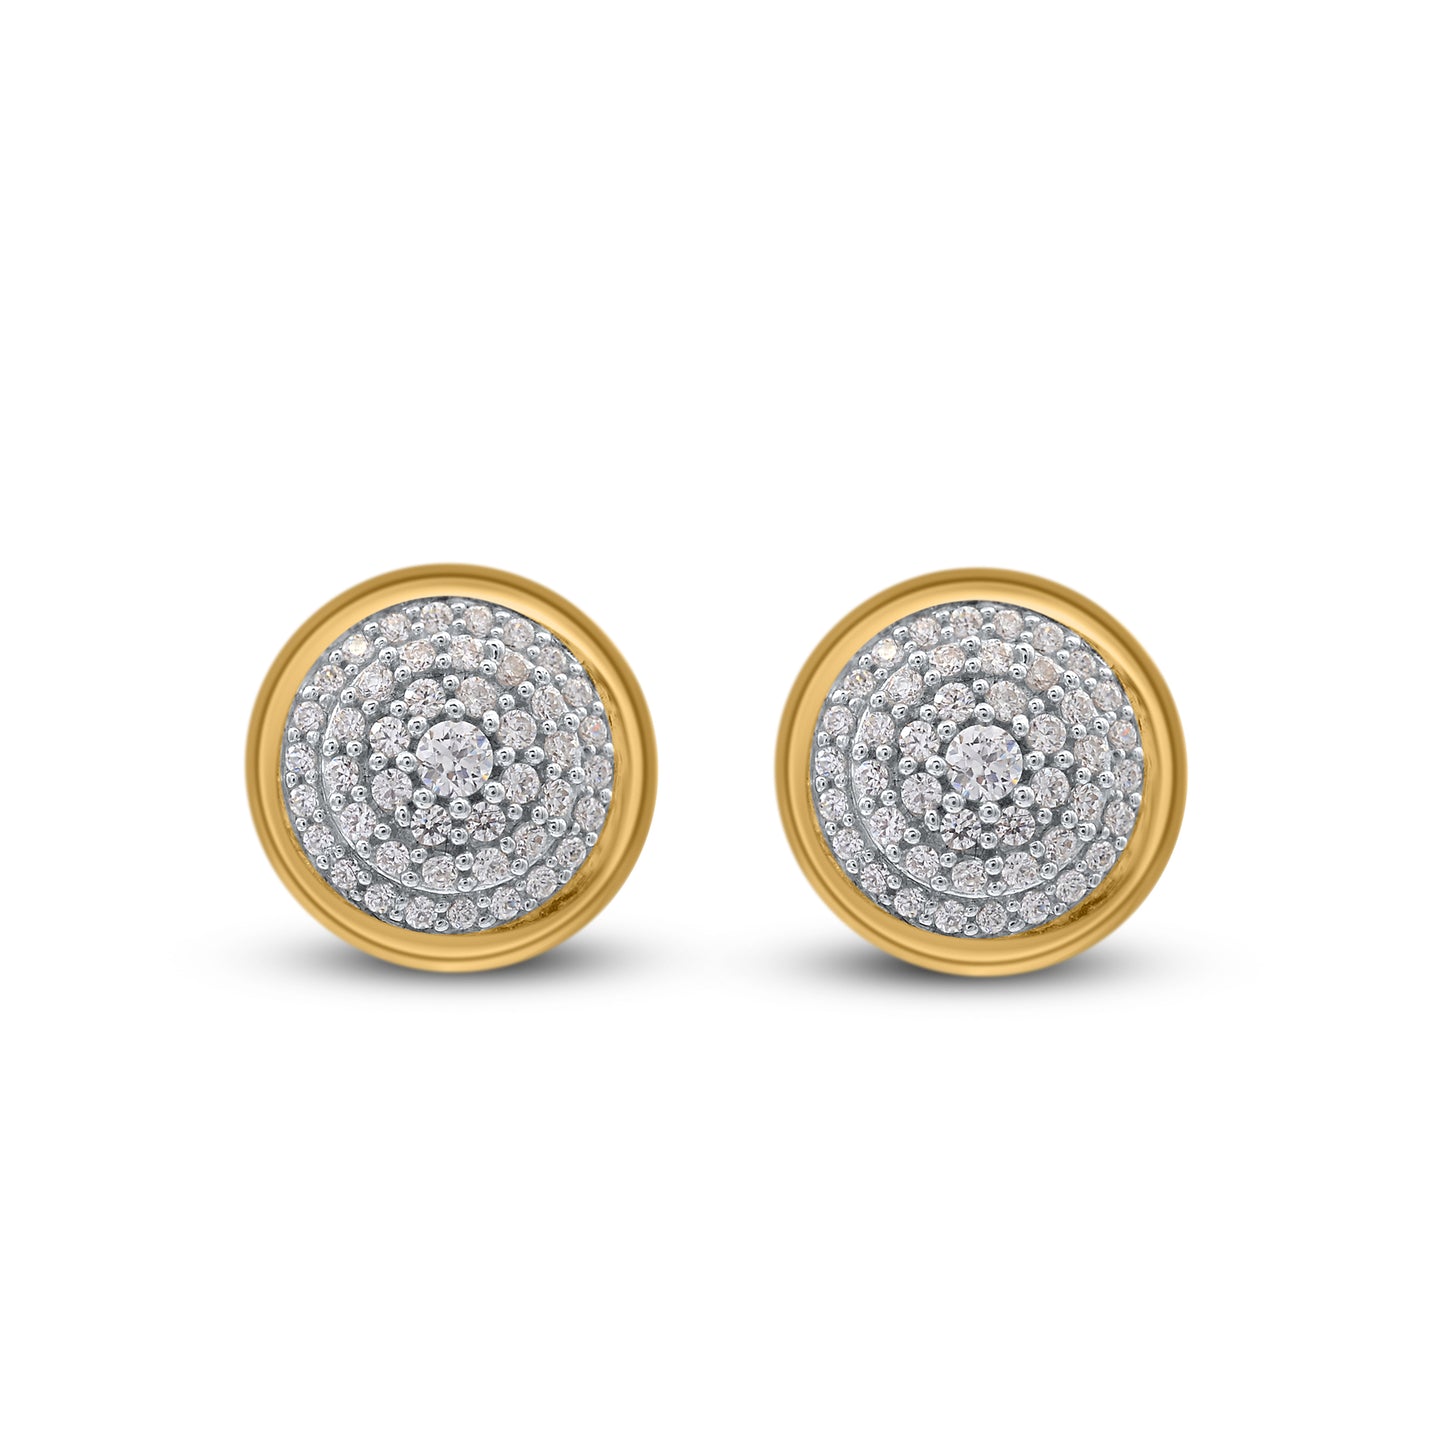 Circle Cluster Earrings in 10K Gold